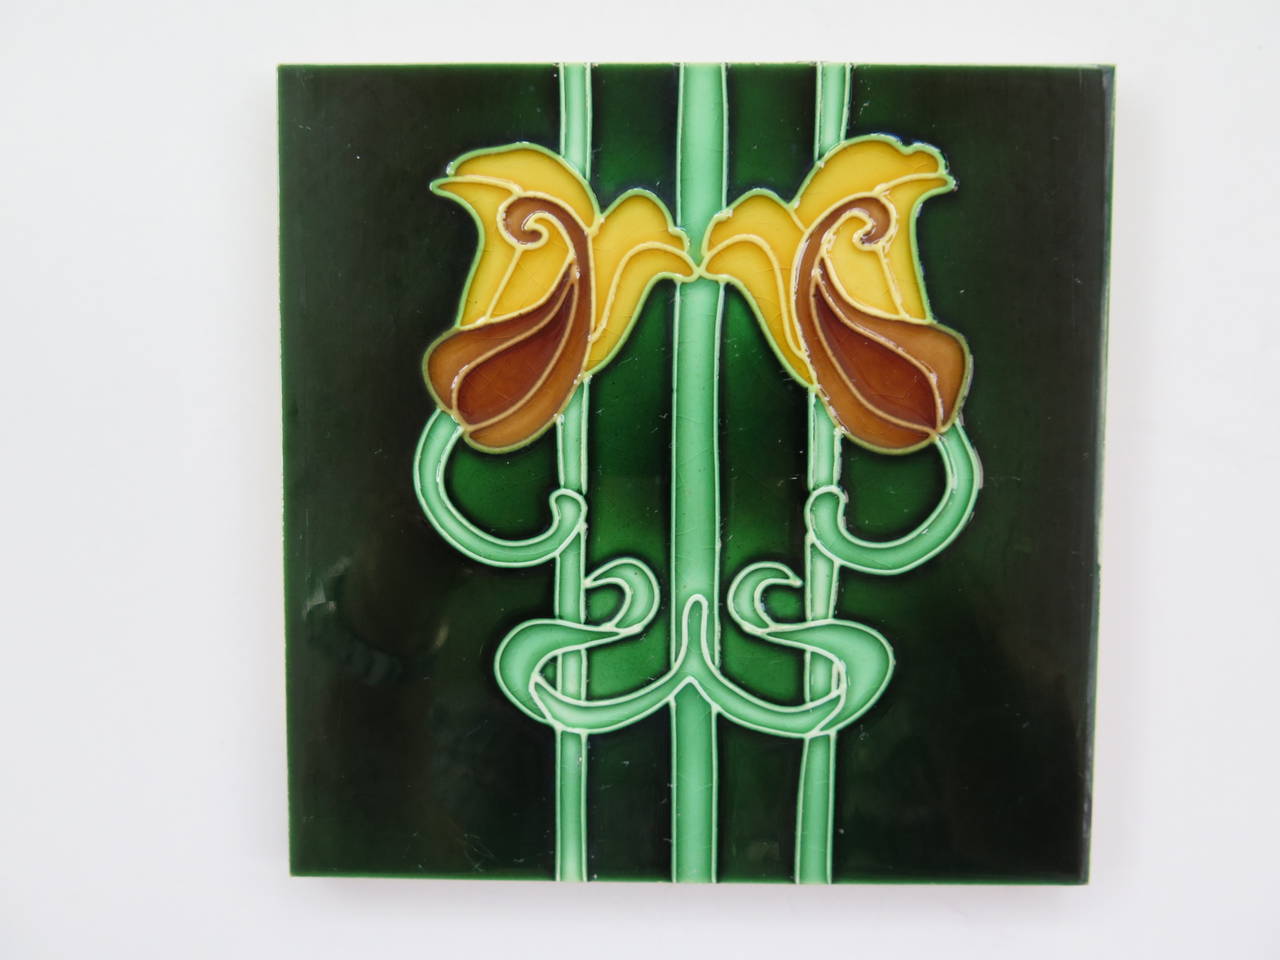 Glazed Set of Ten Ceramic Tiles in the Art Nouveau Style